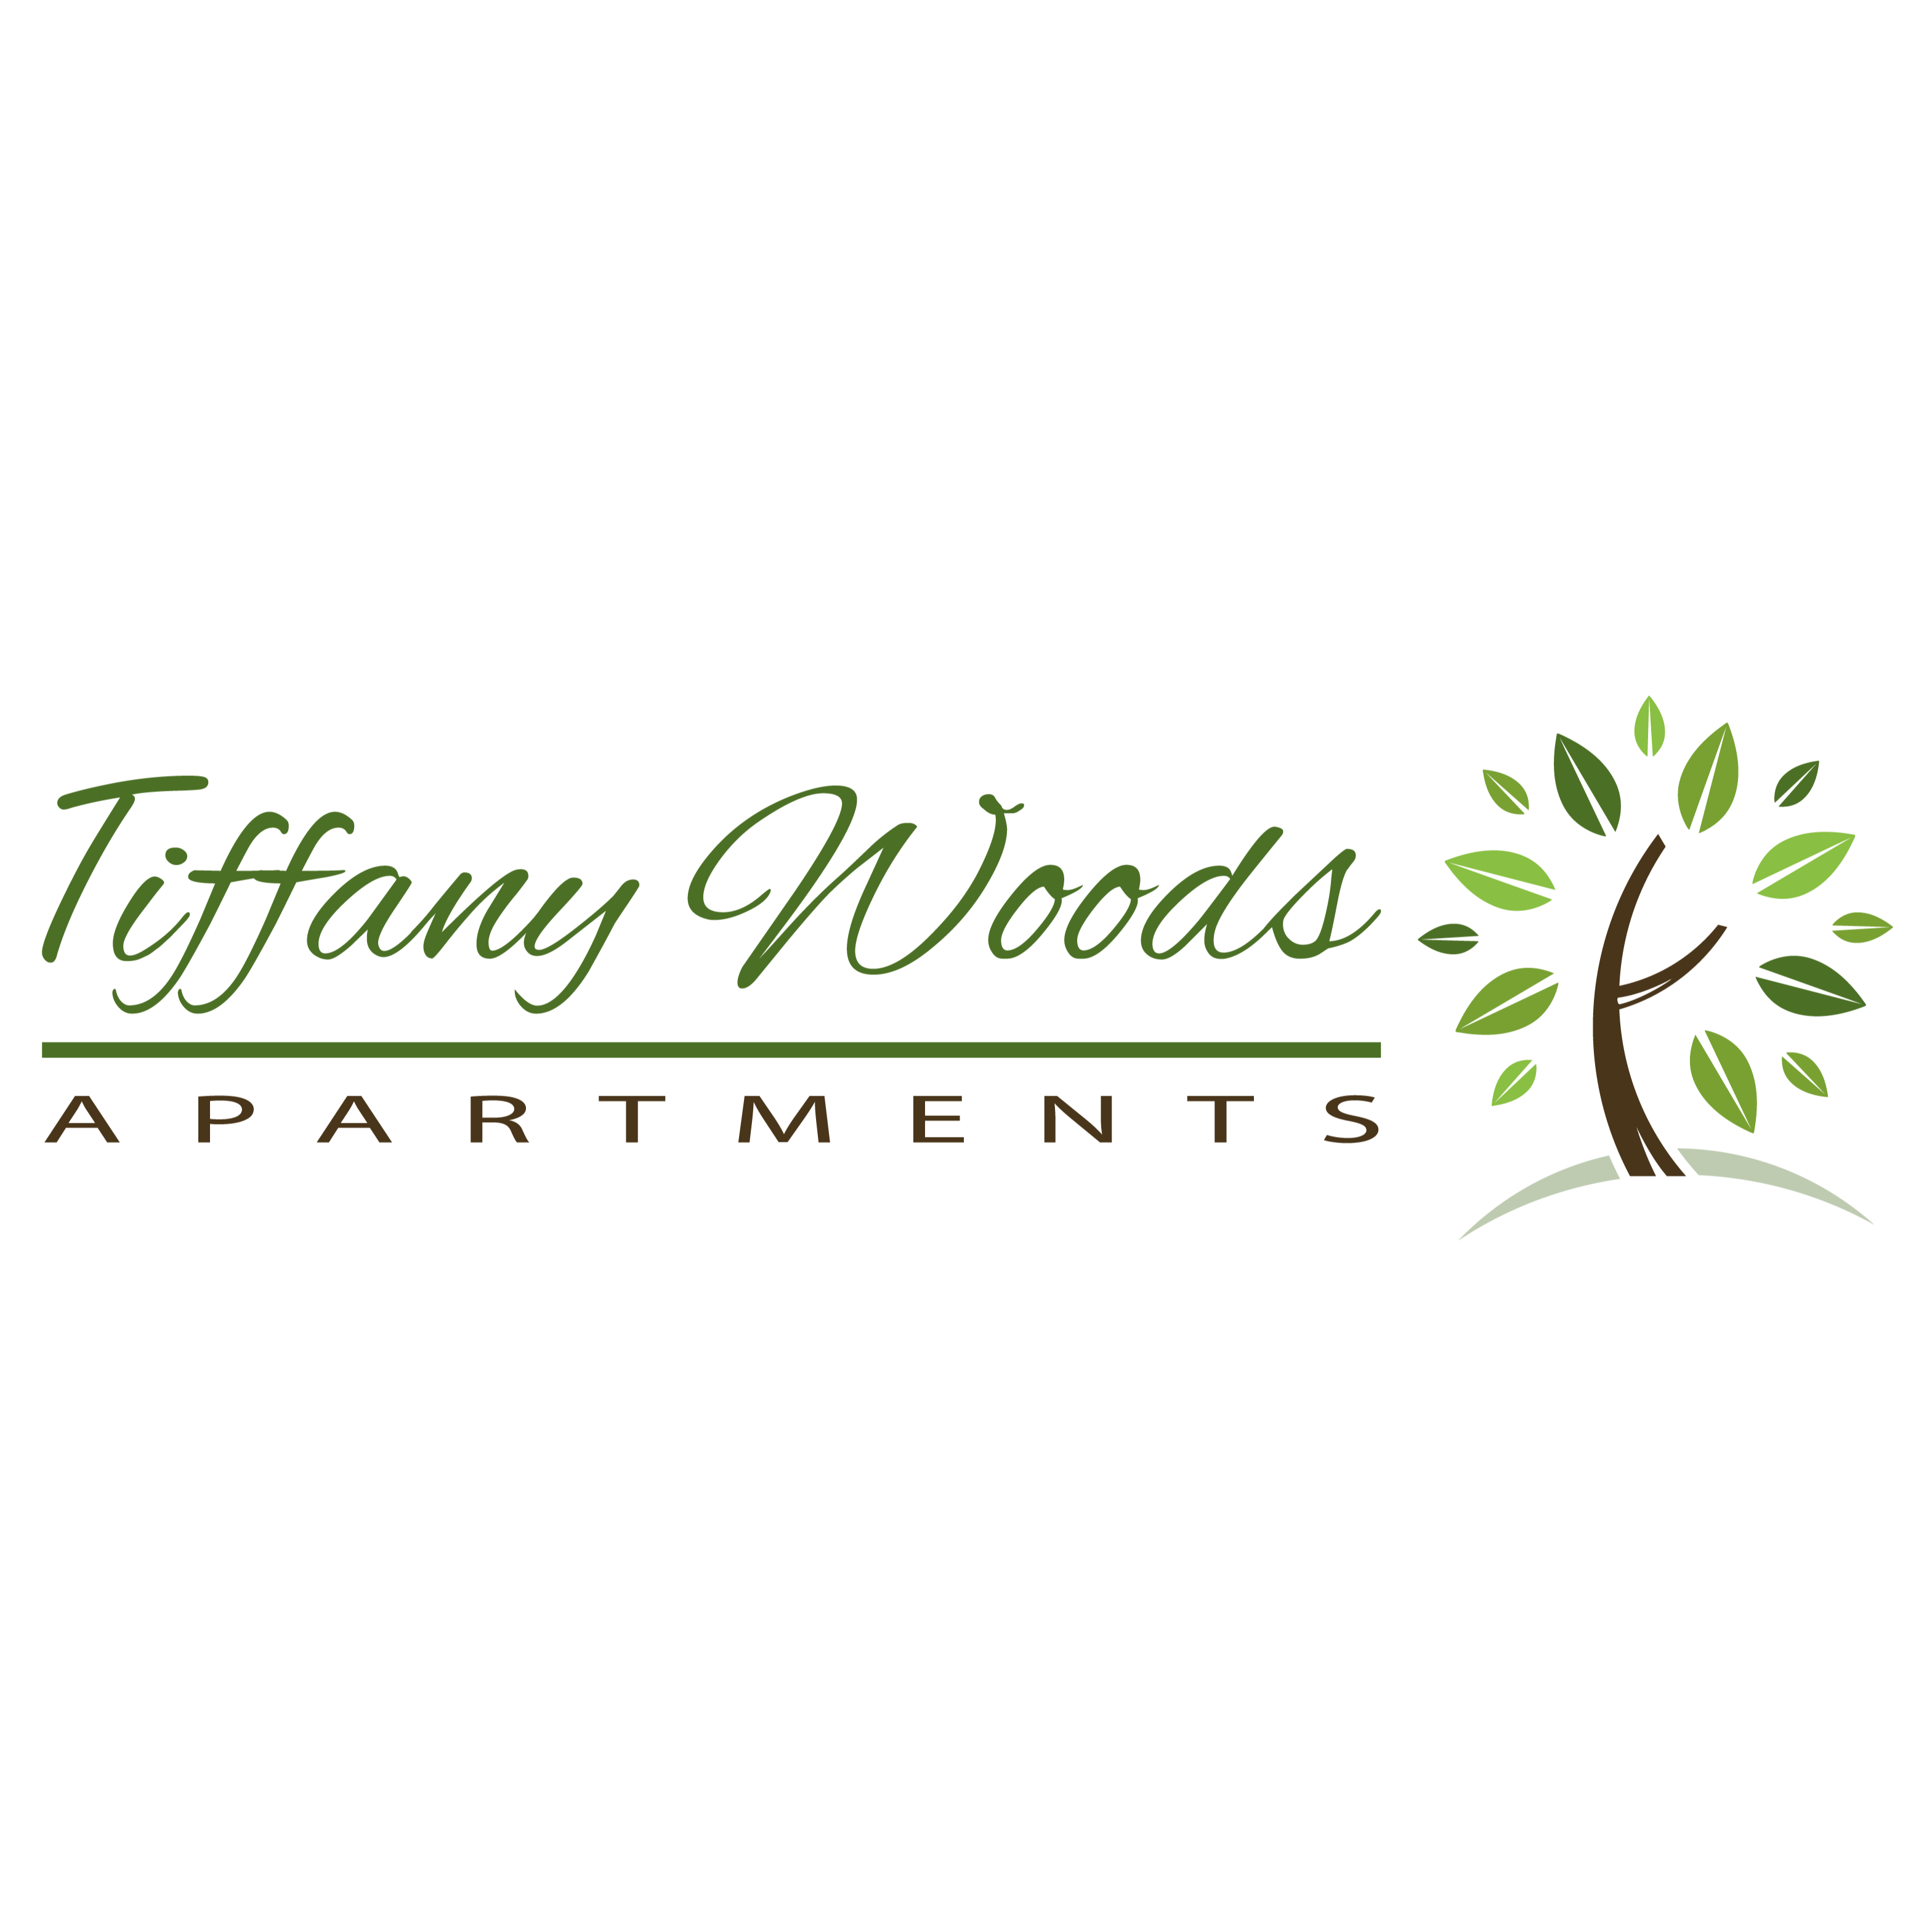 Tiffany Woods Apartments - Muskegon, MI 49441 - (231)444-5690 | ShowMeLocal.com